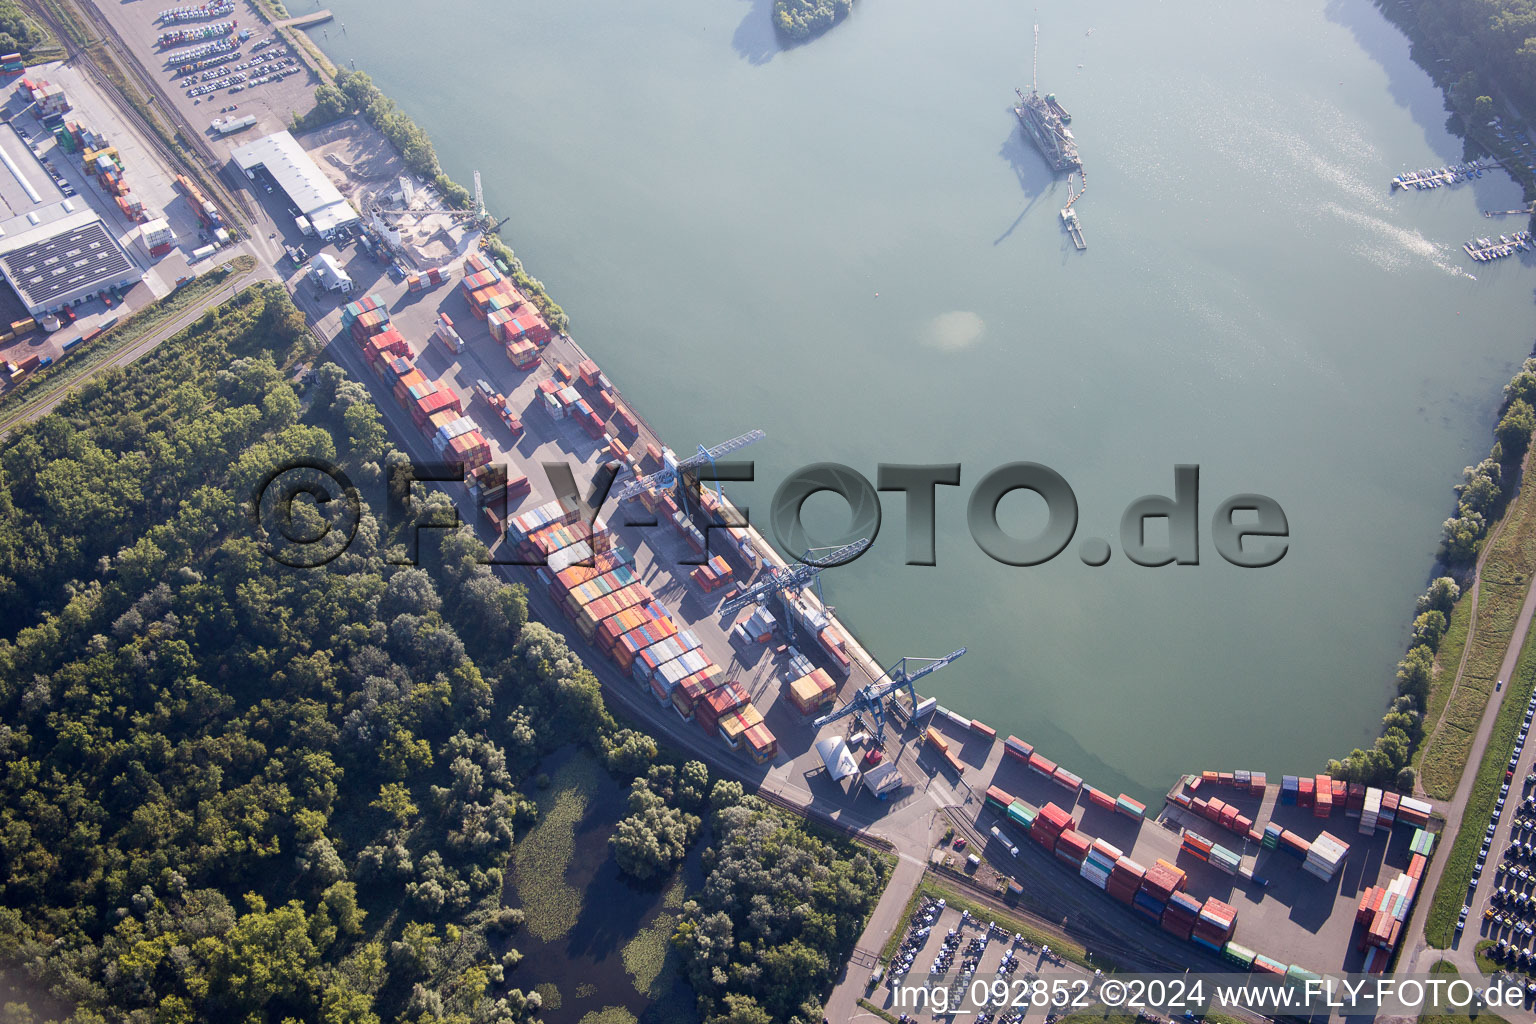 Aerial view of Oberwald industrial area, Rhine port Wörth in the district Maximiliansau in Wörth am Rhein in the state Rhineland-Palatinate, Germany